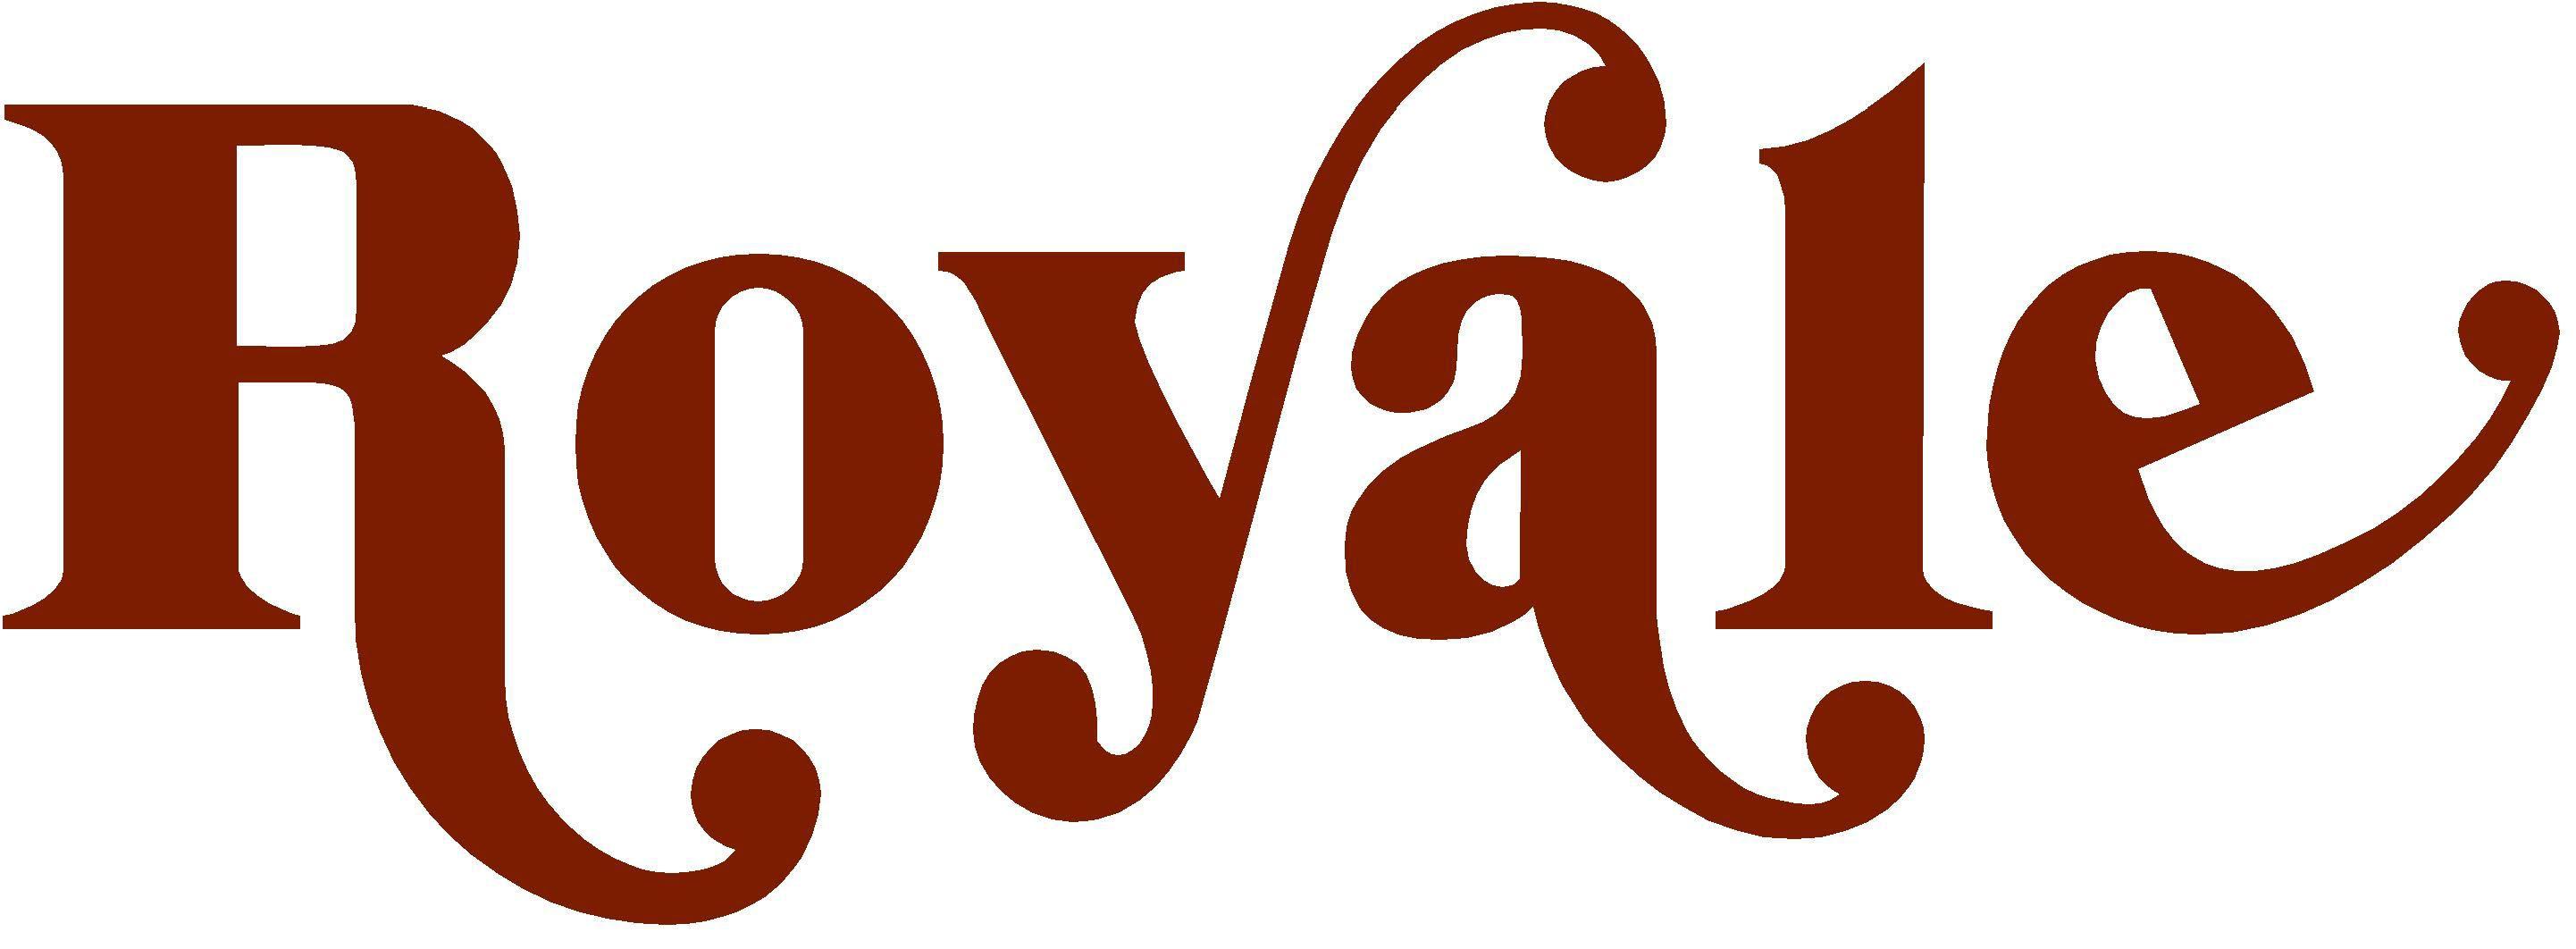 Royale Logo - Royale Logo [Royale] - $5.00 : DL Design.com